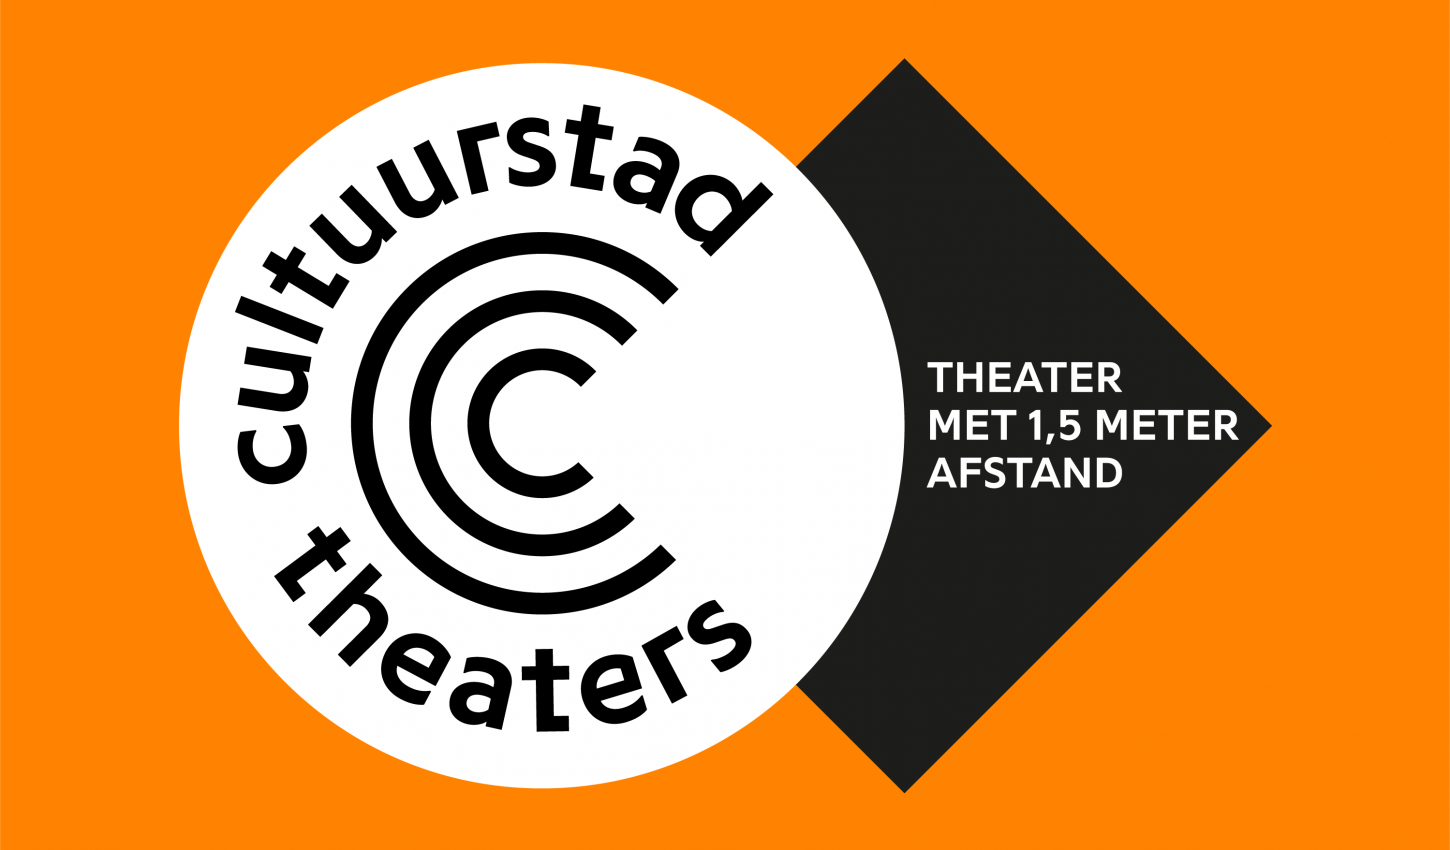 CultuurstadTheaters_zwartlogo_slogan_oranjeachtergrond